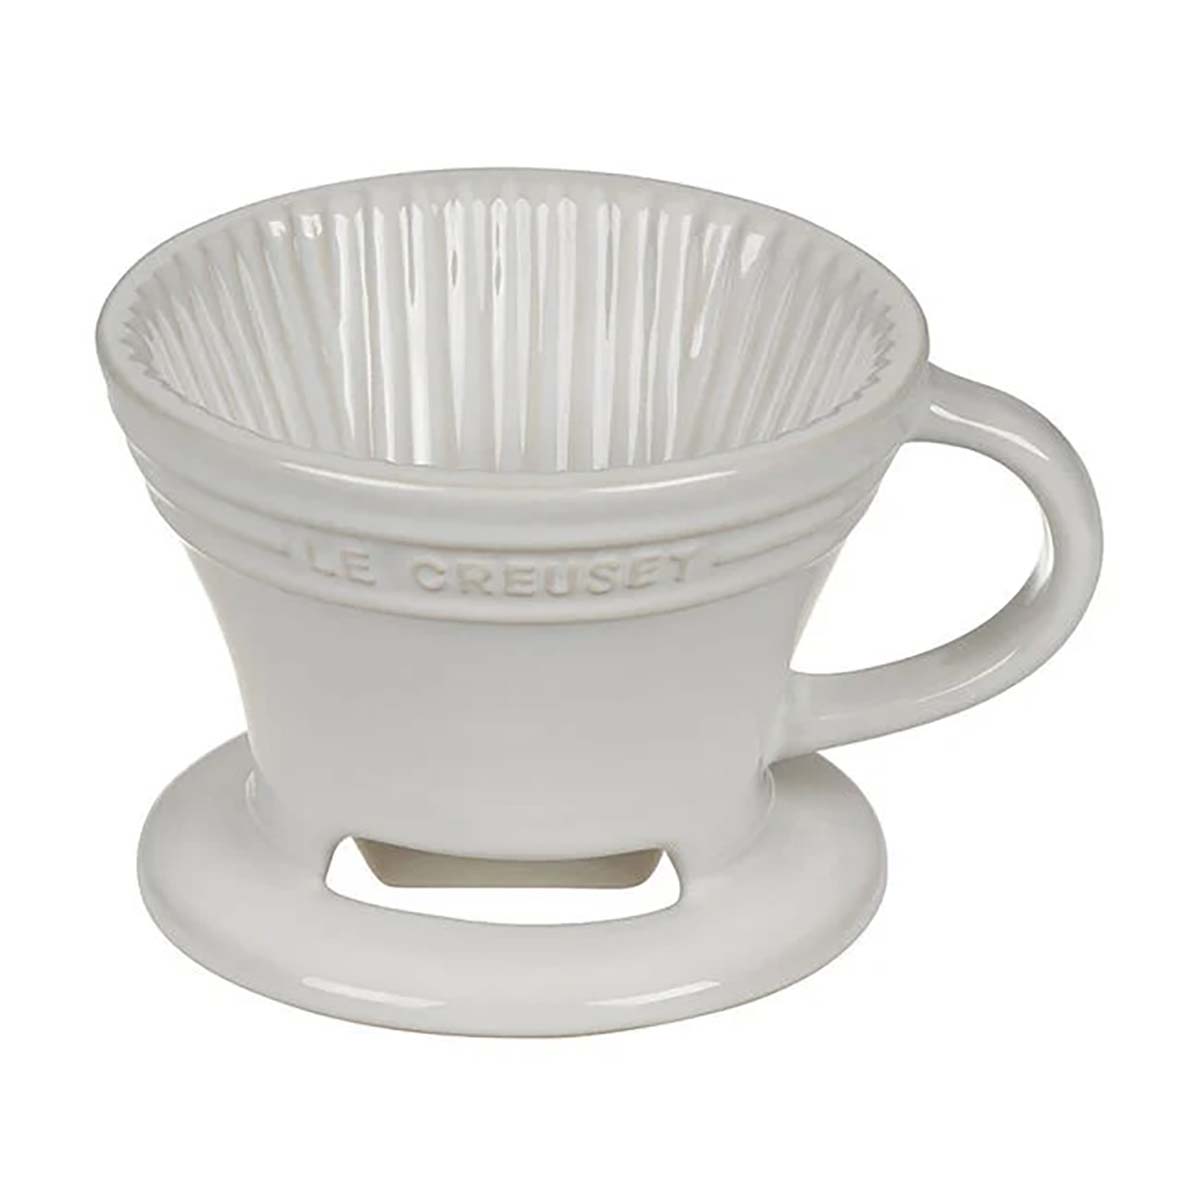 Le Creuset Pour Over Coffee Cone - White